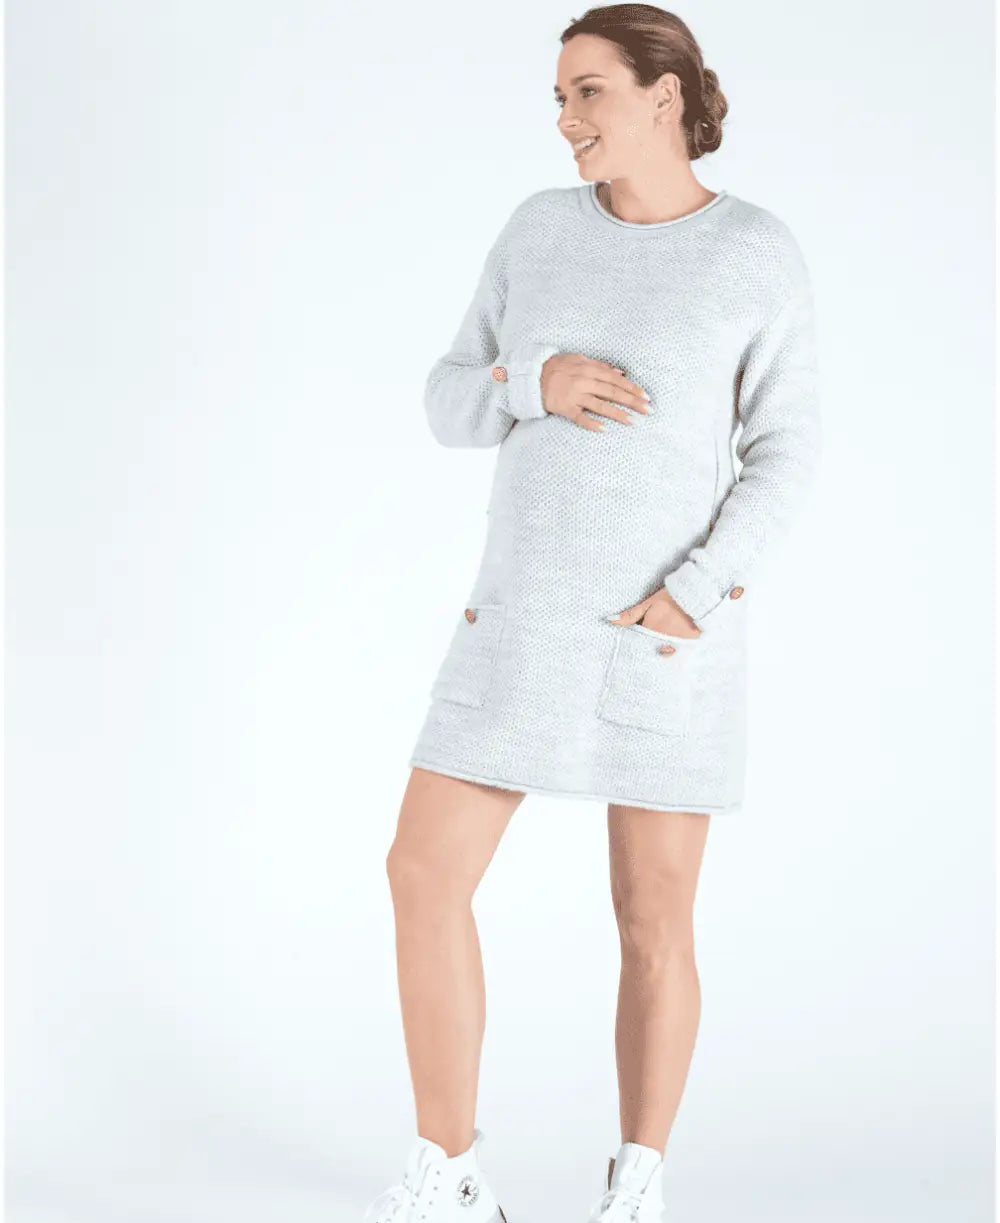 Pregnancy and nursing dress Honey pearl gray - Robes